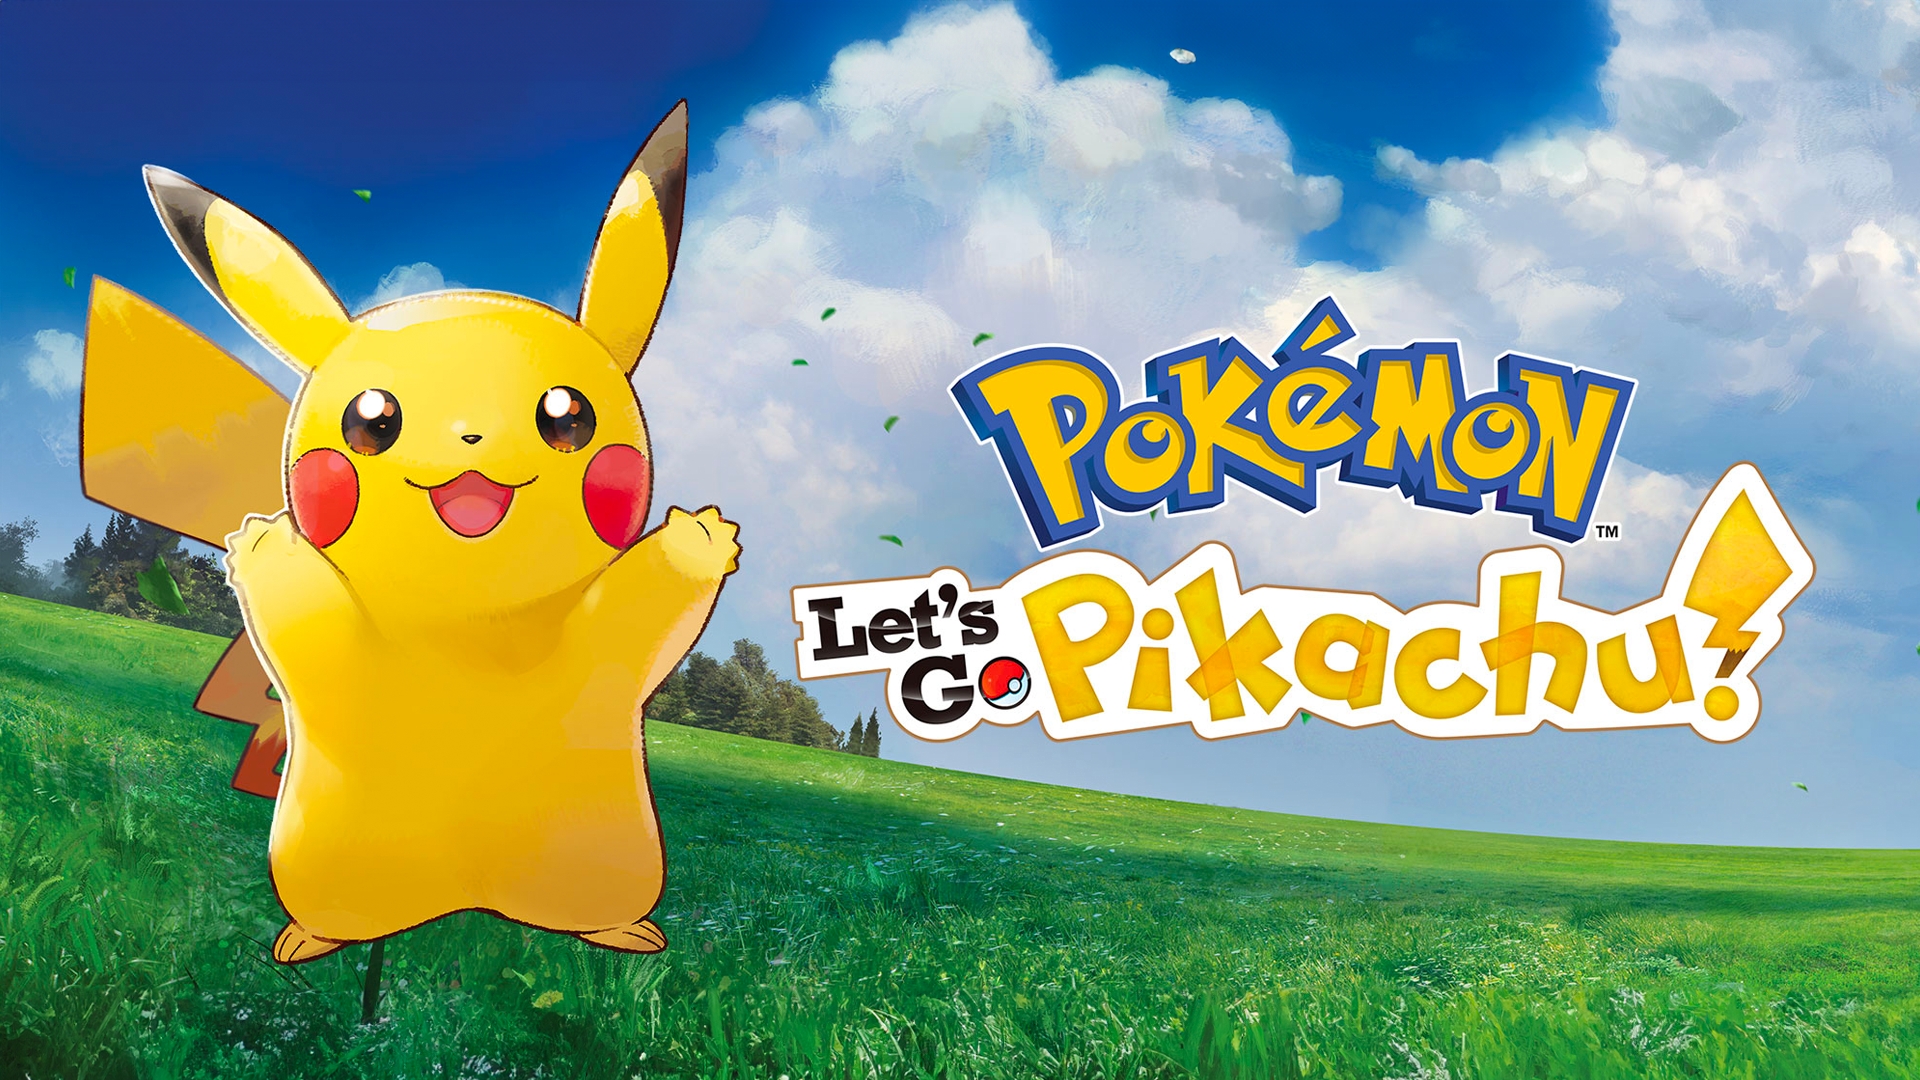 NINTENDO Pokemon Let's Go, Pikachu! (Switch) - Digital Download